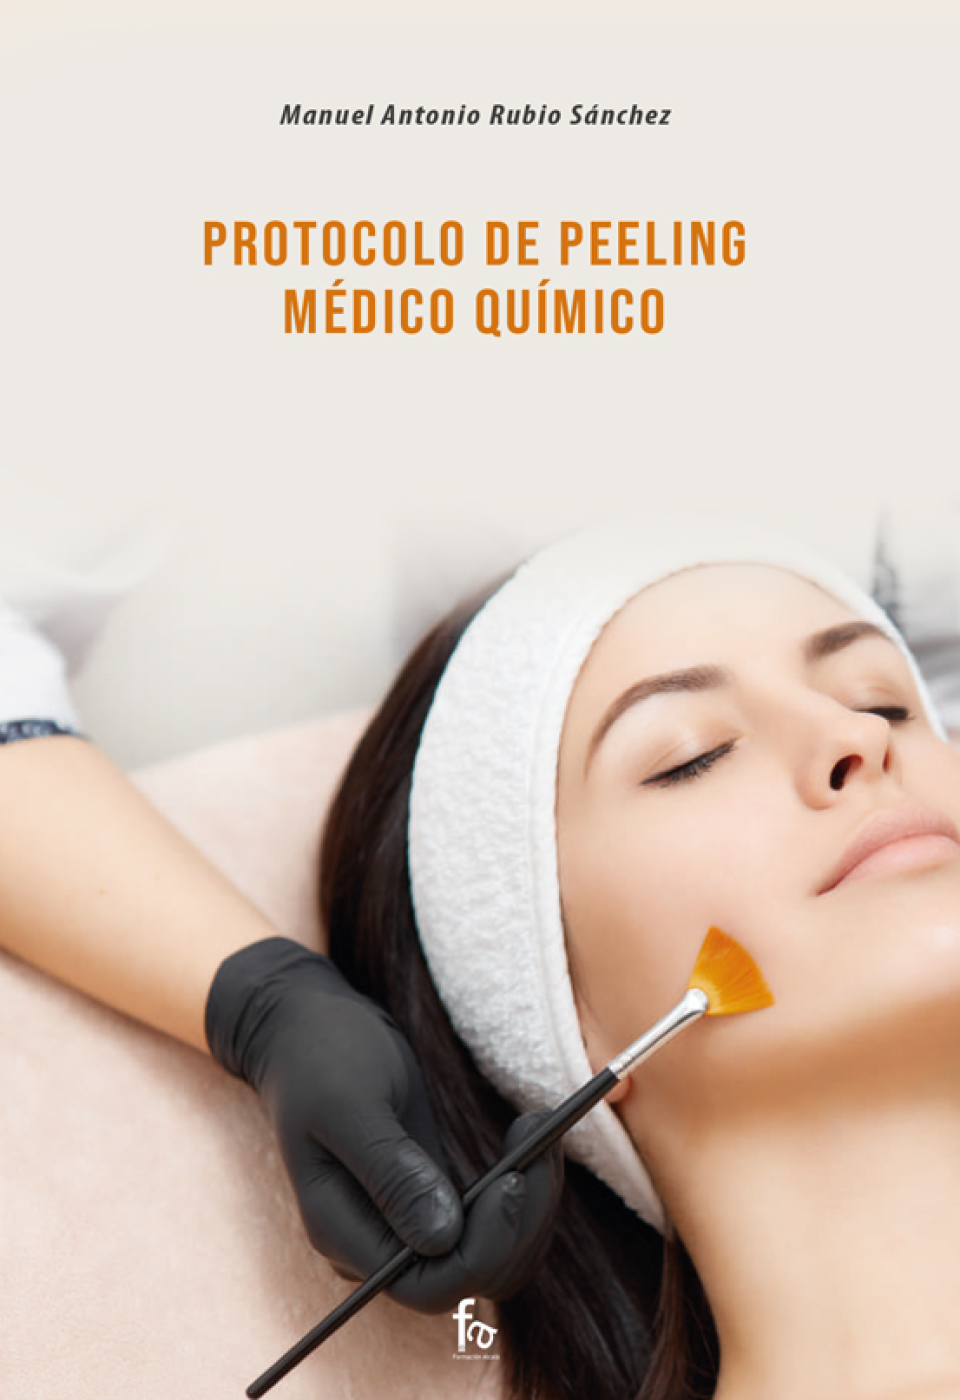 Medical Chemical Peeling Protocol